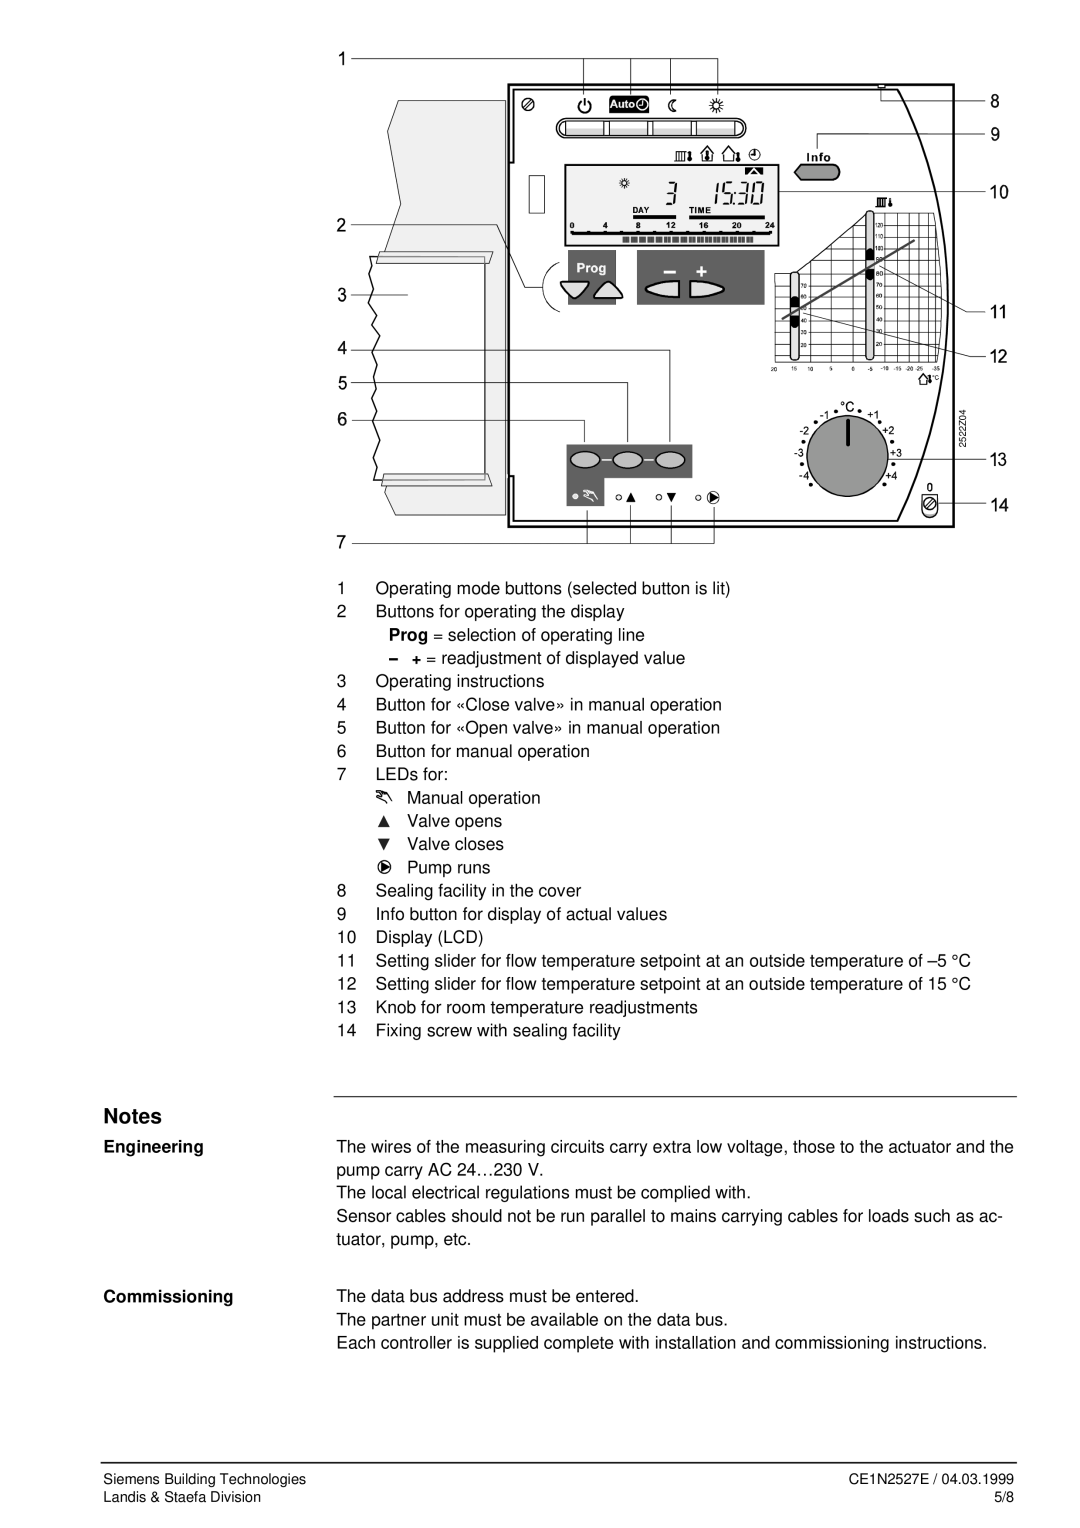 LG Electronics RVL469 manual Engineering, Commissioning 